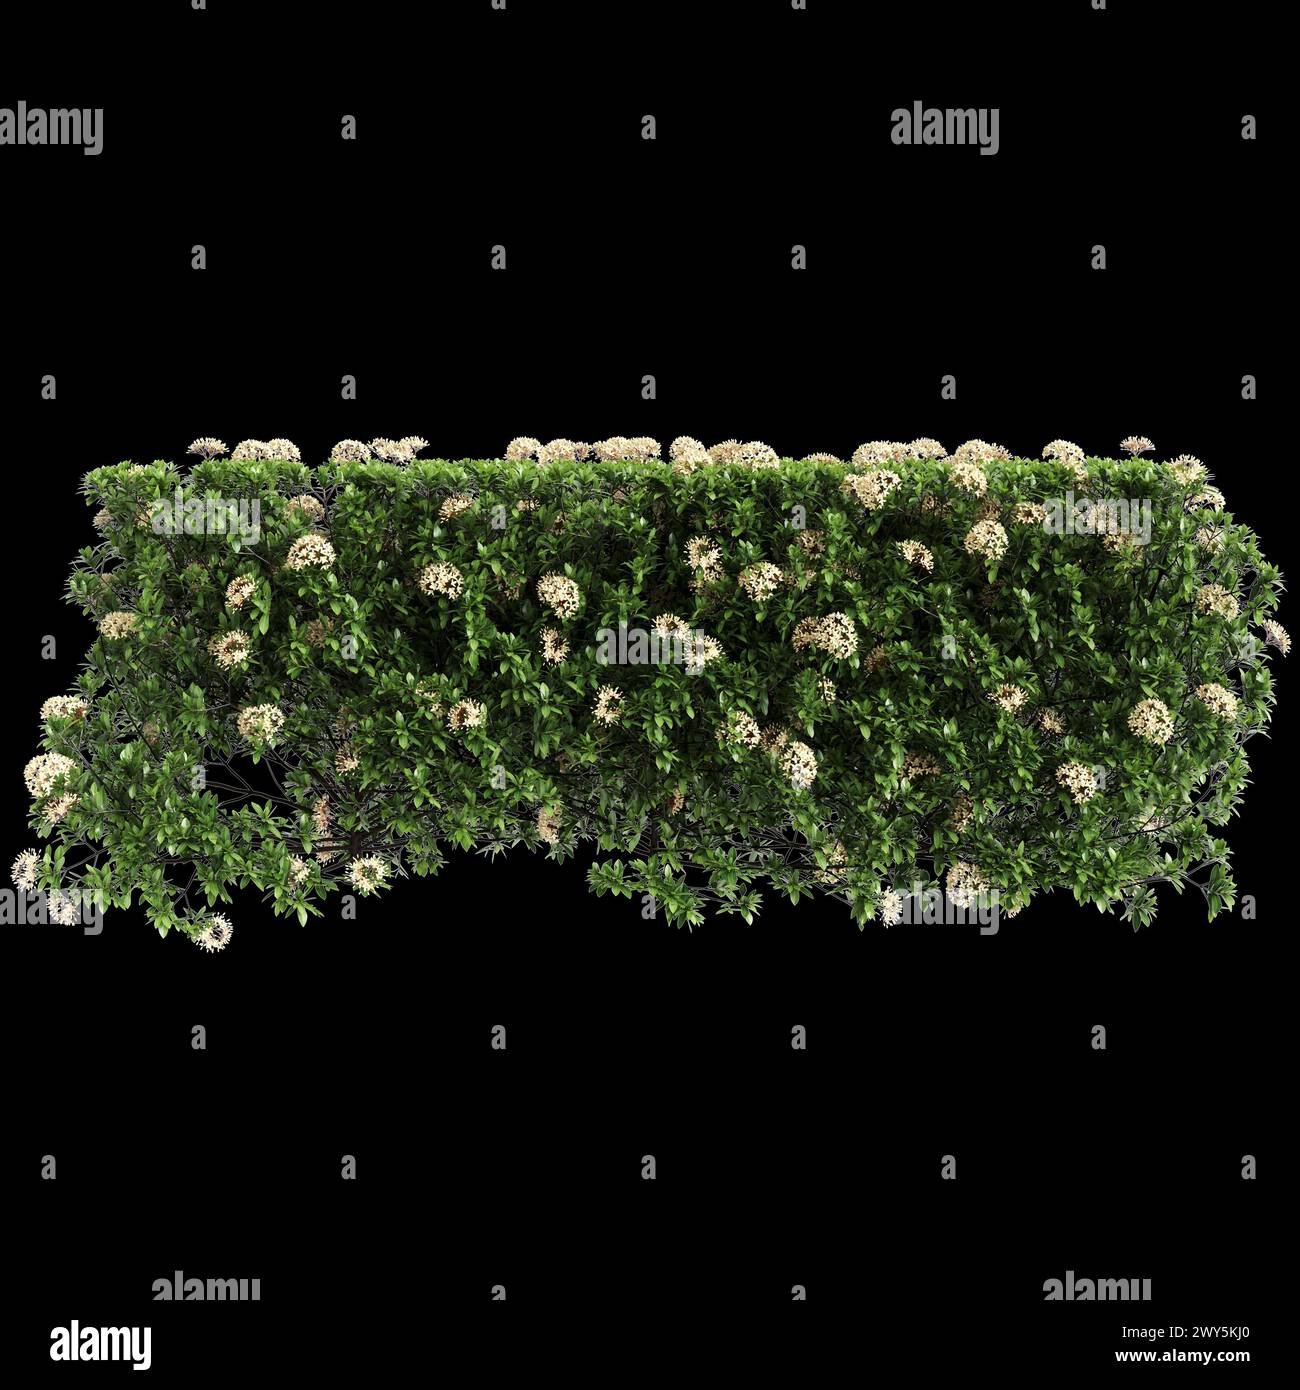 3d illustration of Ixora taiwanensis treeline isolated on black background Stock Photo